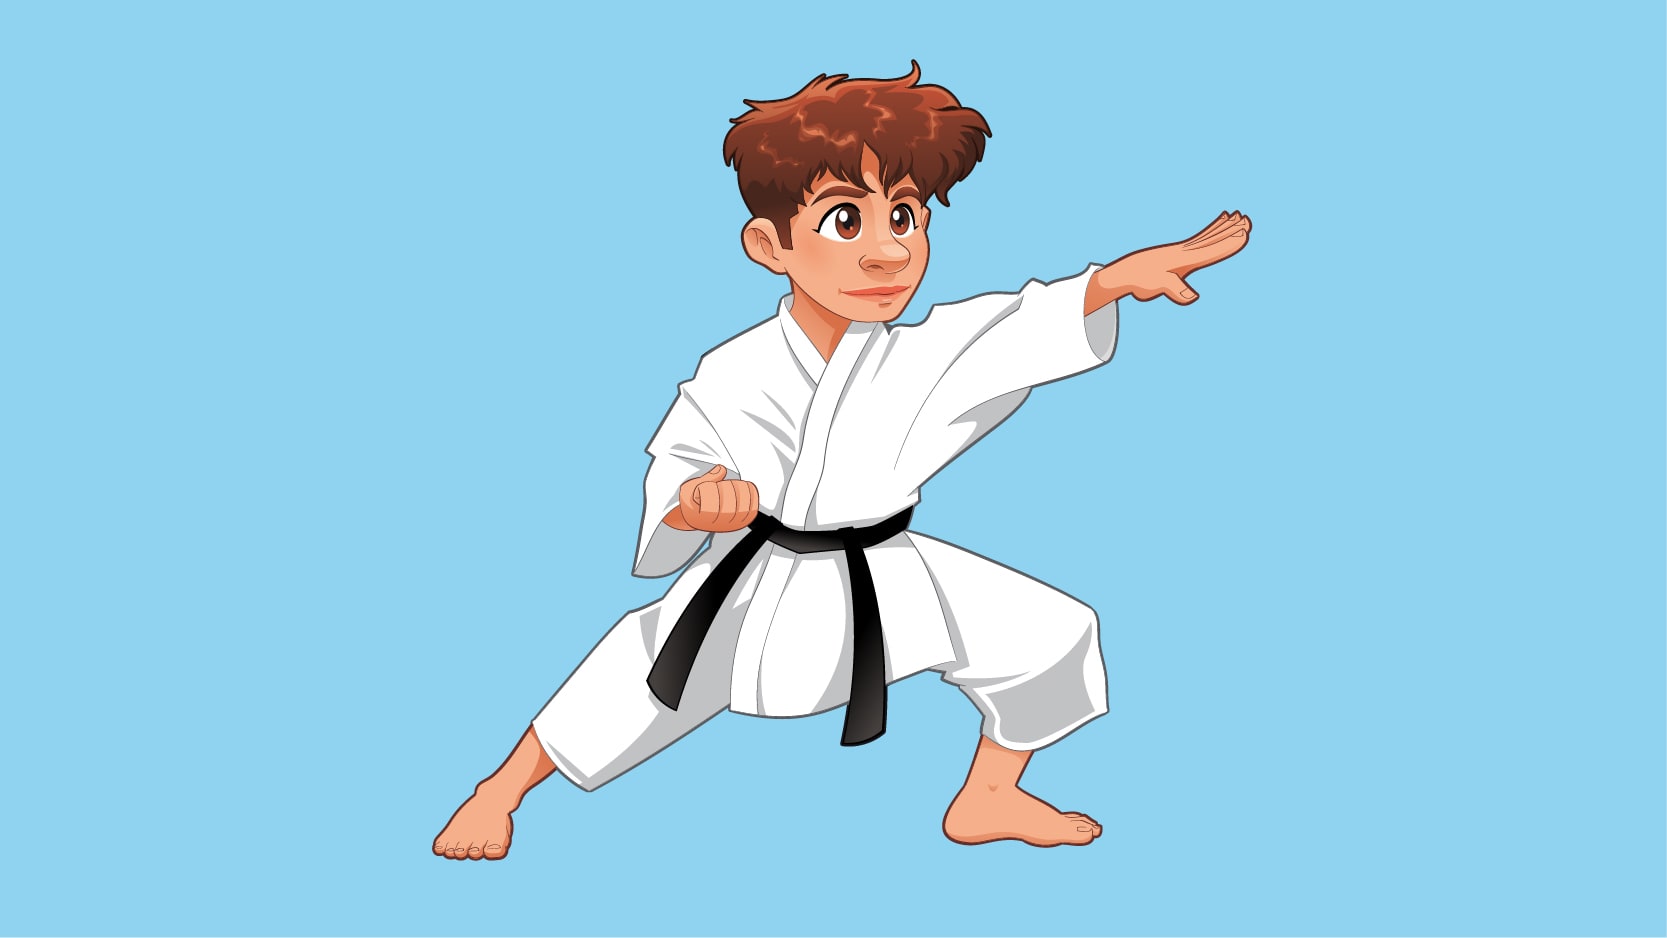 Aprende Bojutsu Kata y Técnicas - 6º Kyu